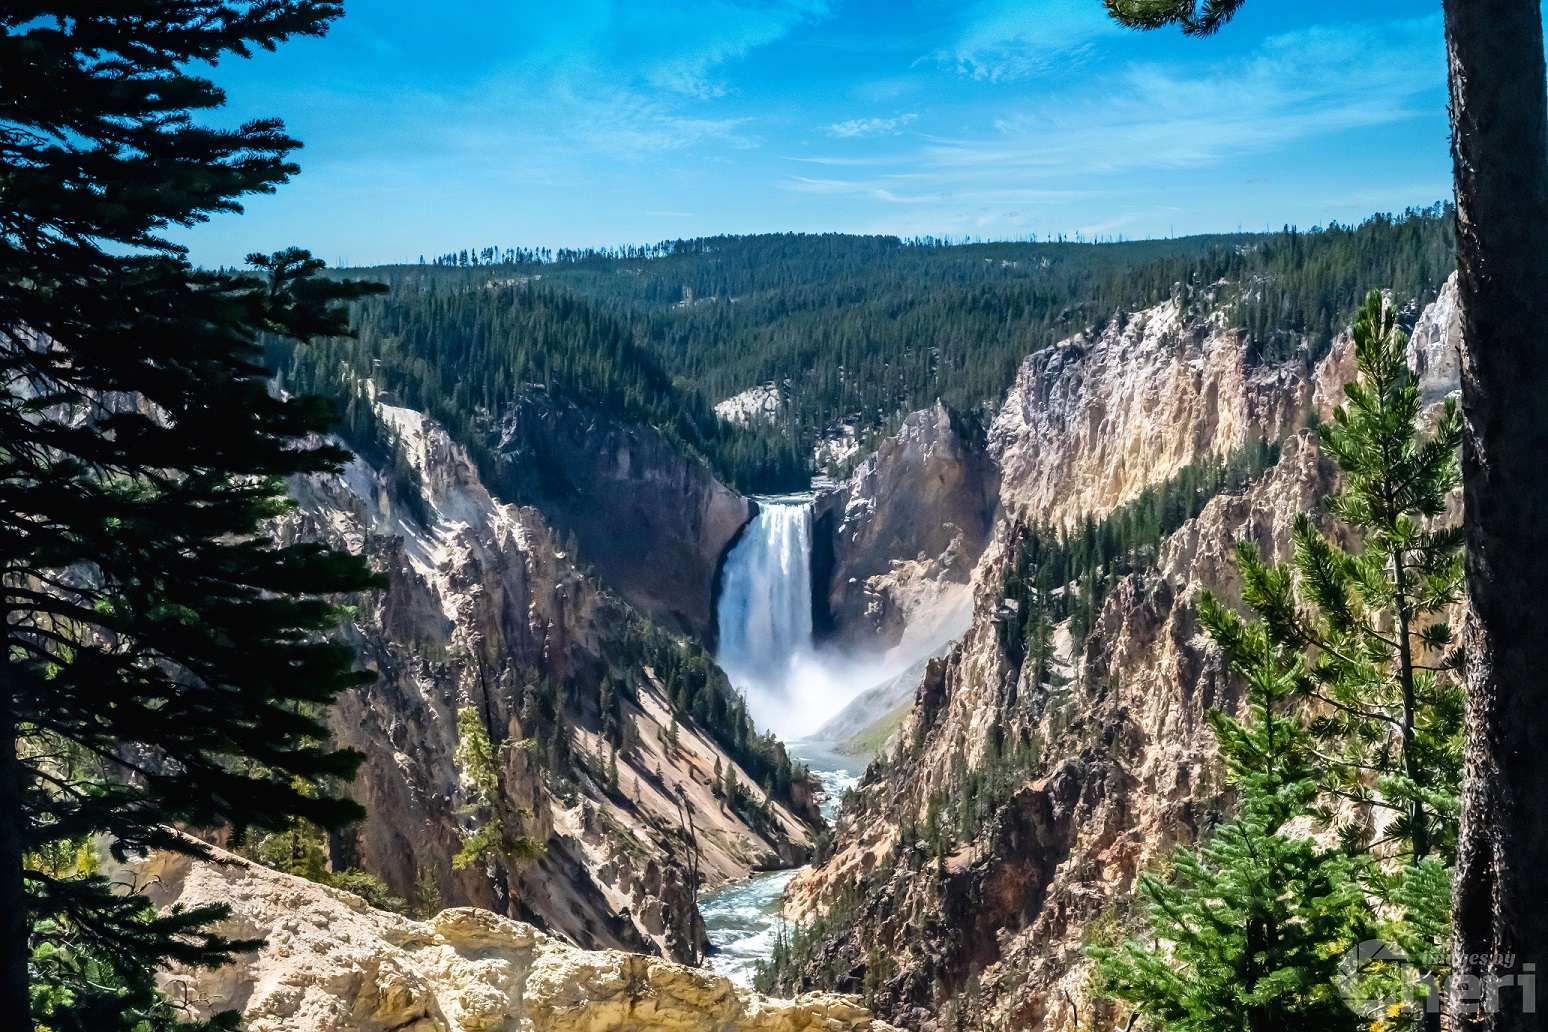 Rushing Waters: Lower Falls at Yellowstone